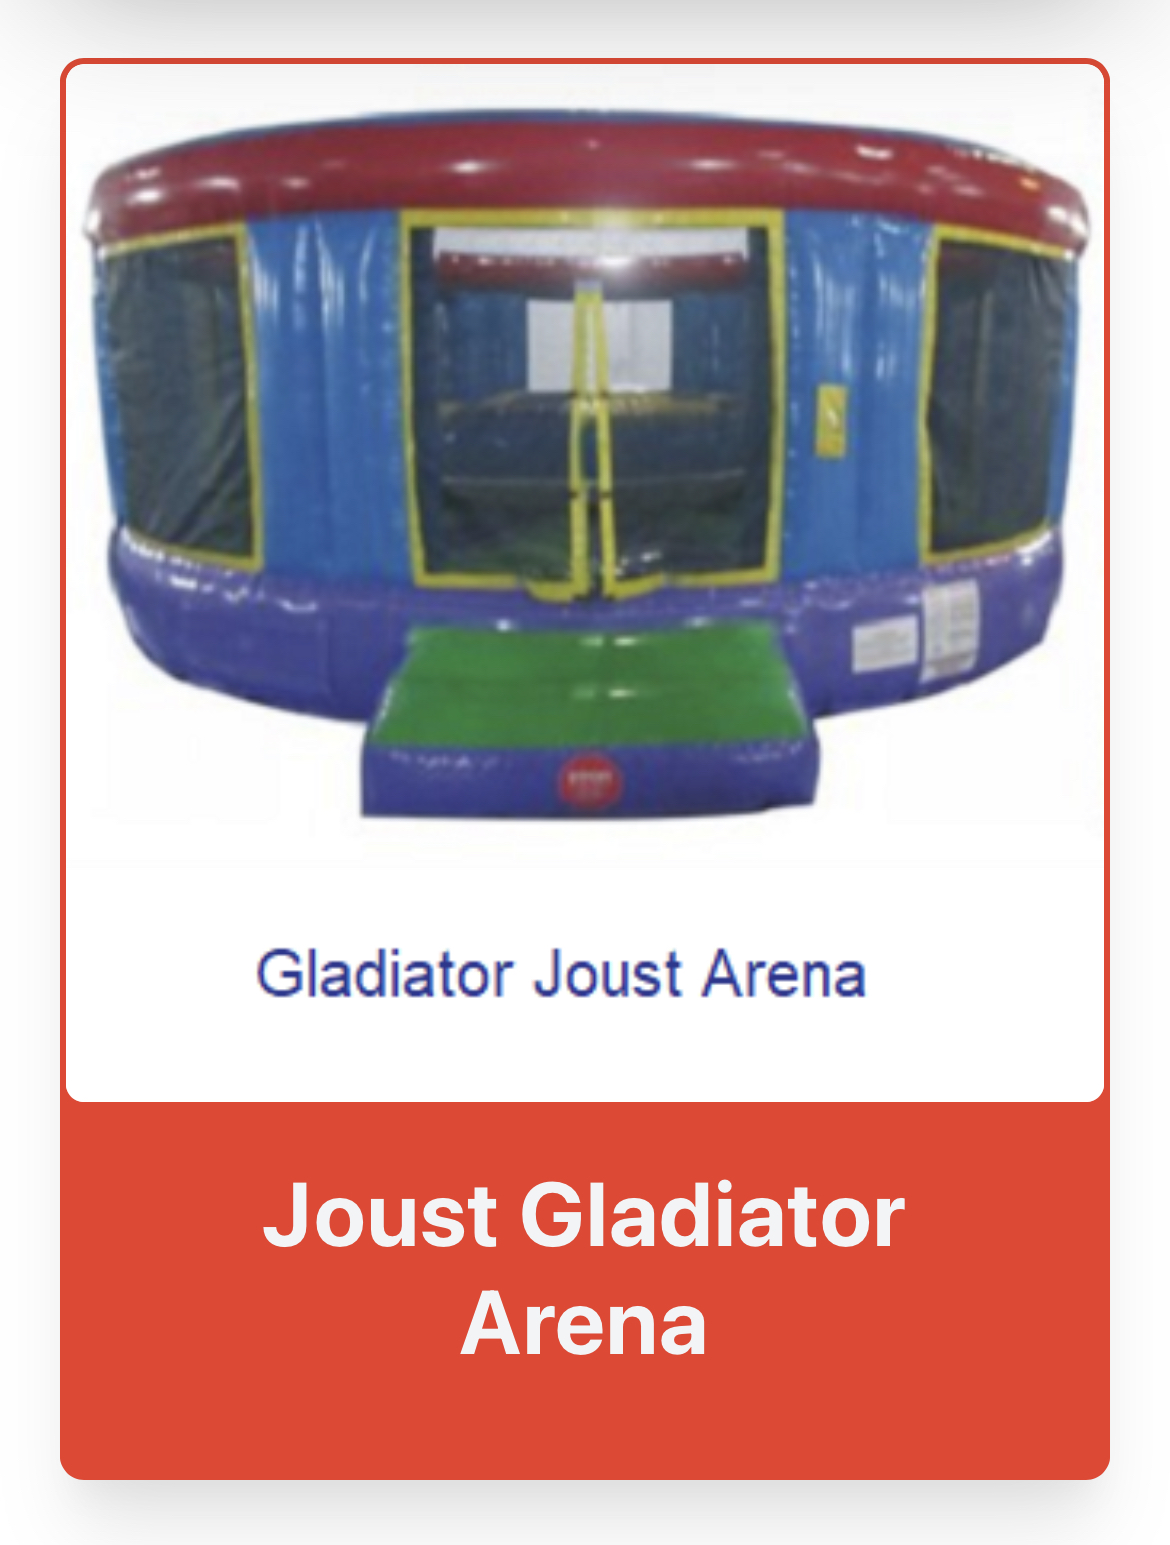 Joust Gladiator